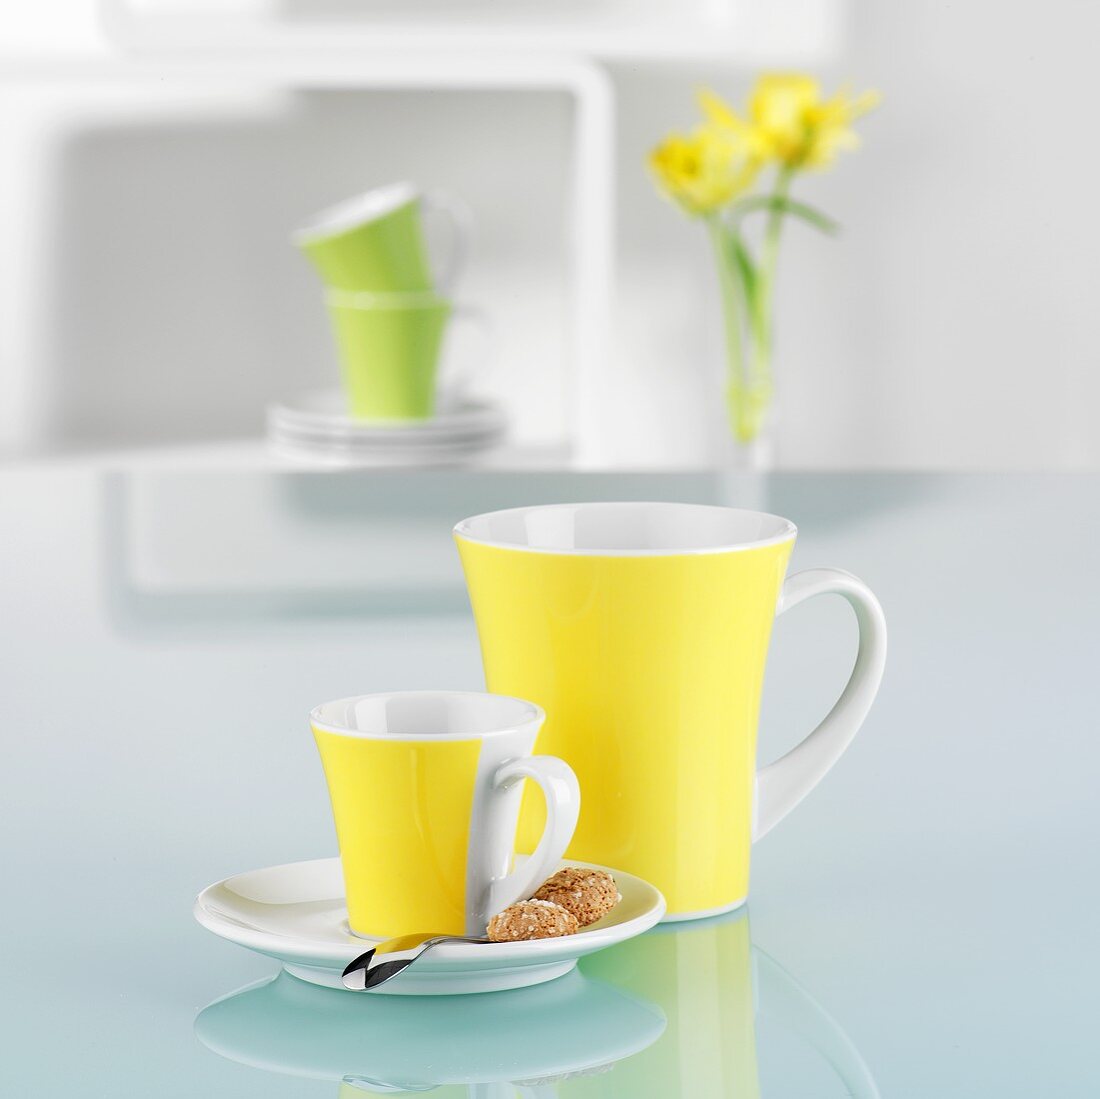 Kaffeetassen in Frühlingsfarben (gelb, grün)